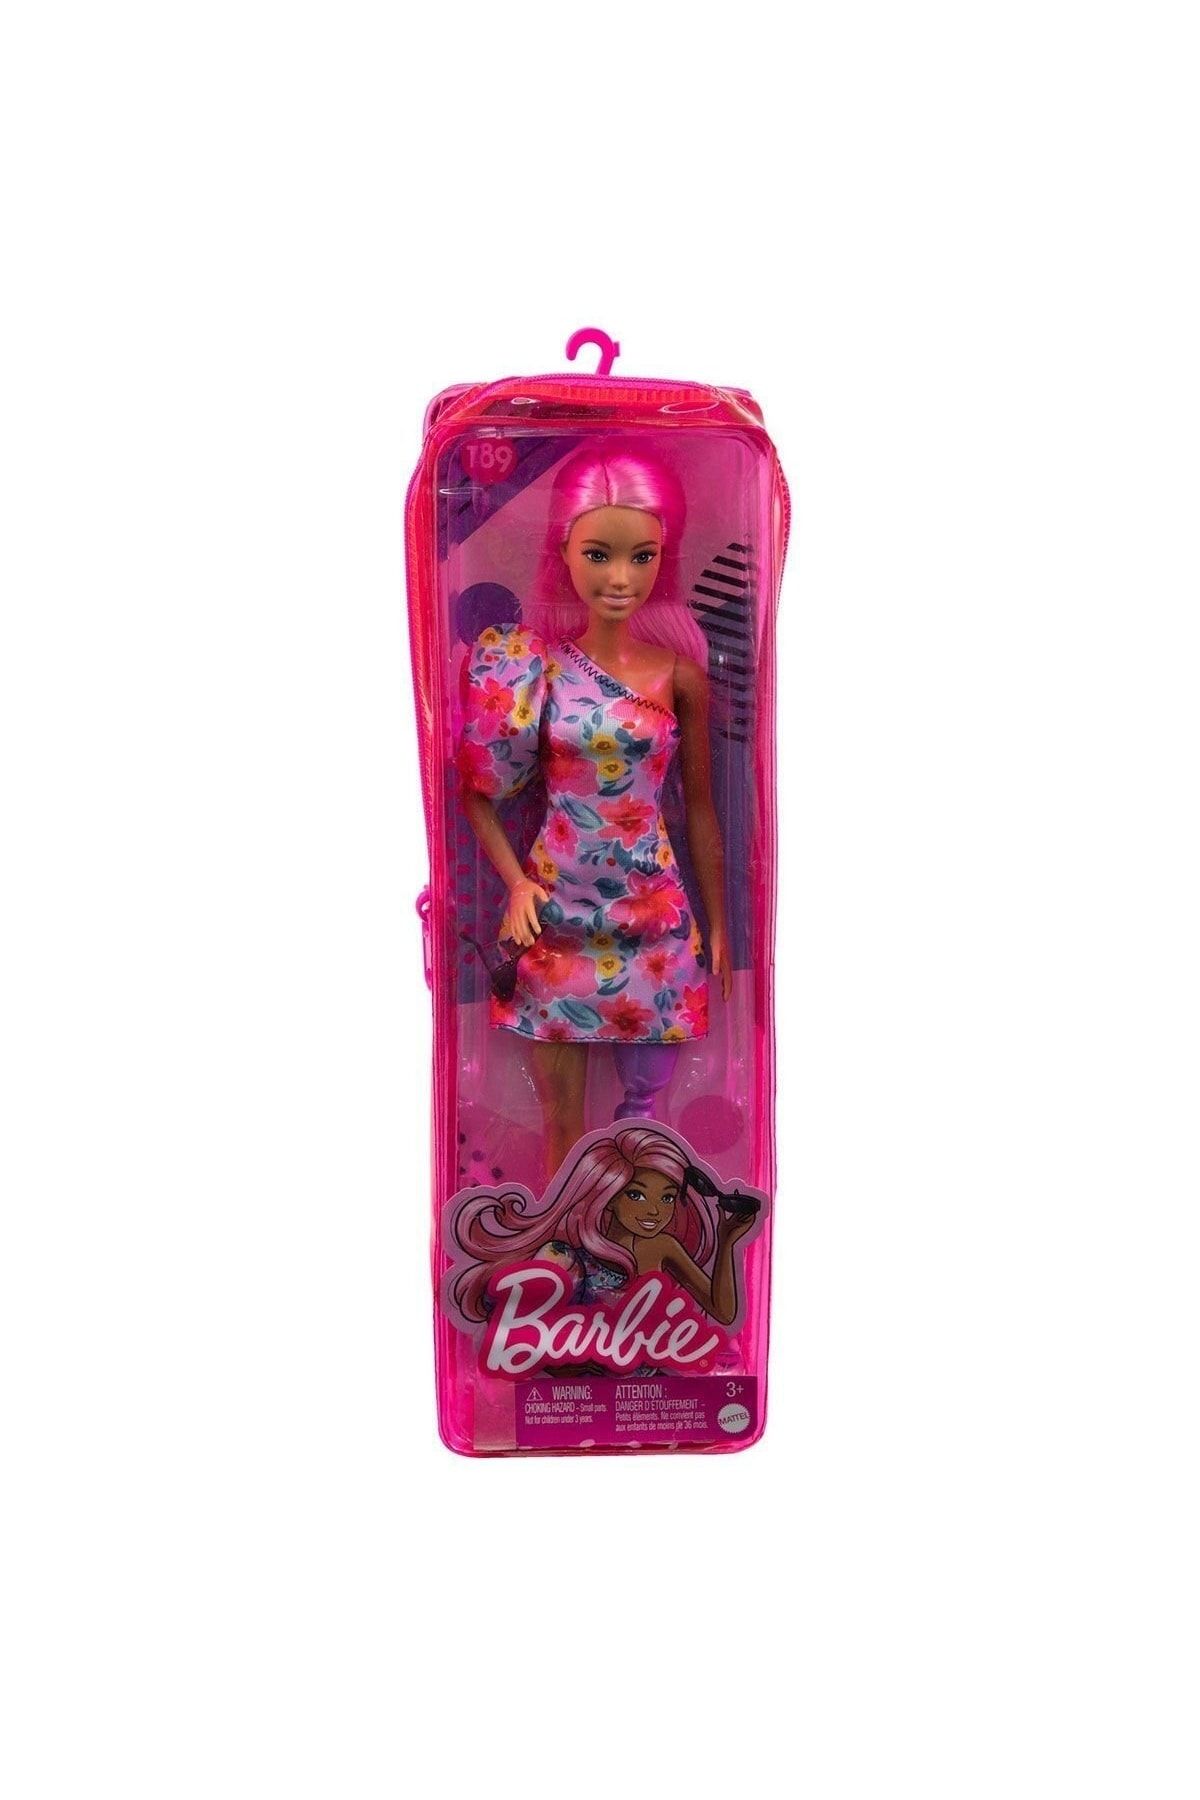 Barbie HBV21 Barbie Fashionistas Tek Omuz Elbiseli, Protez Bacaklı